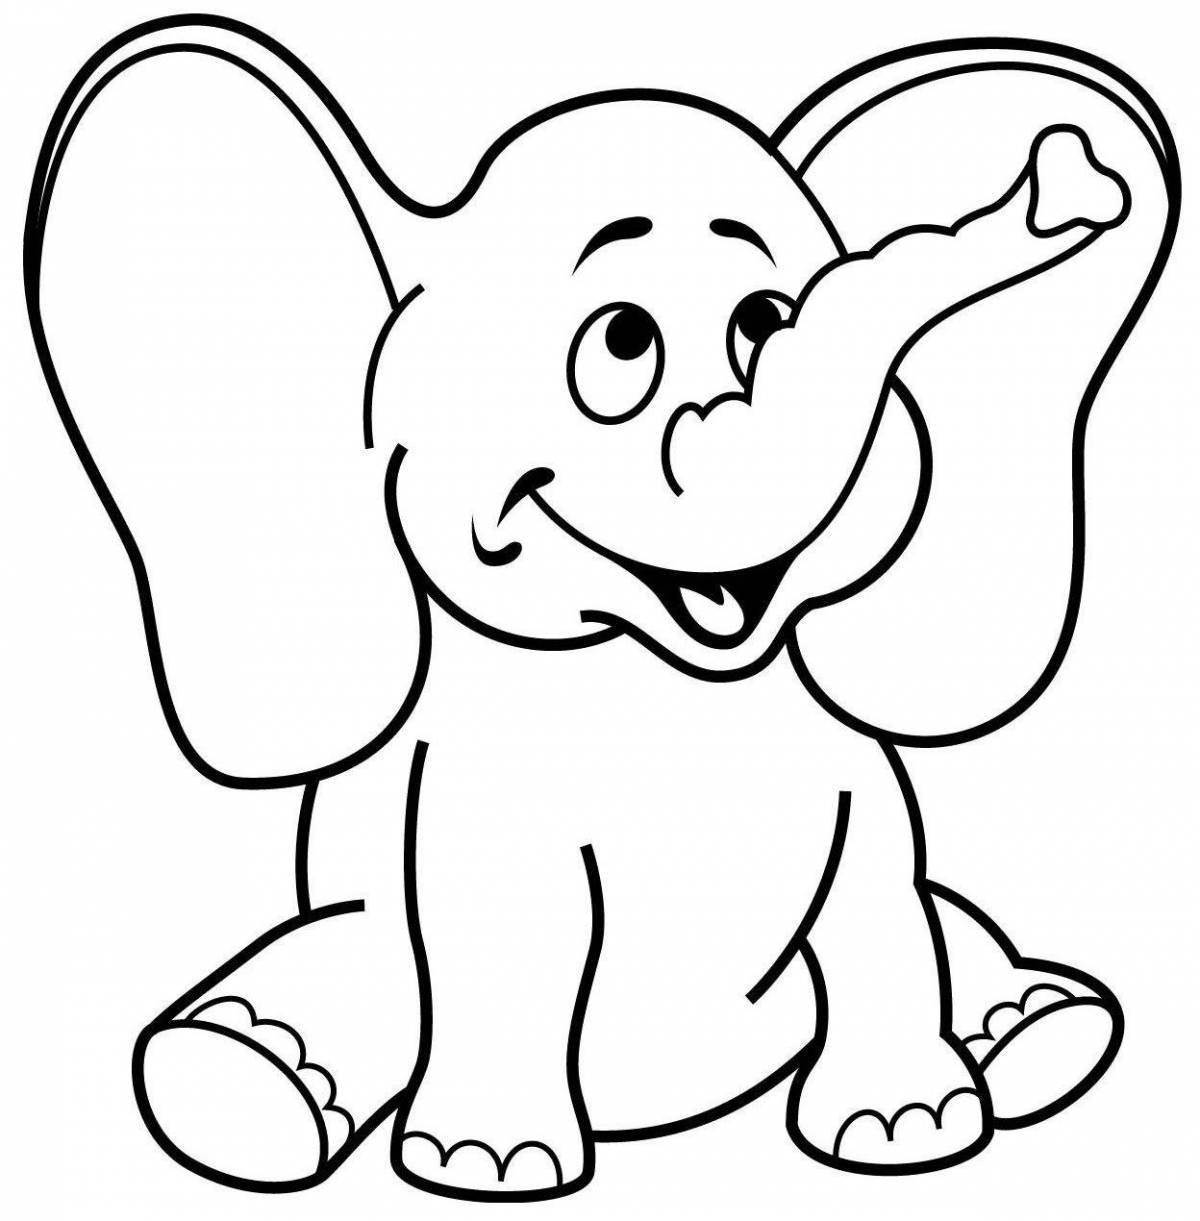 Amazing elephant coloring book